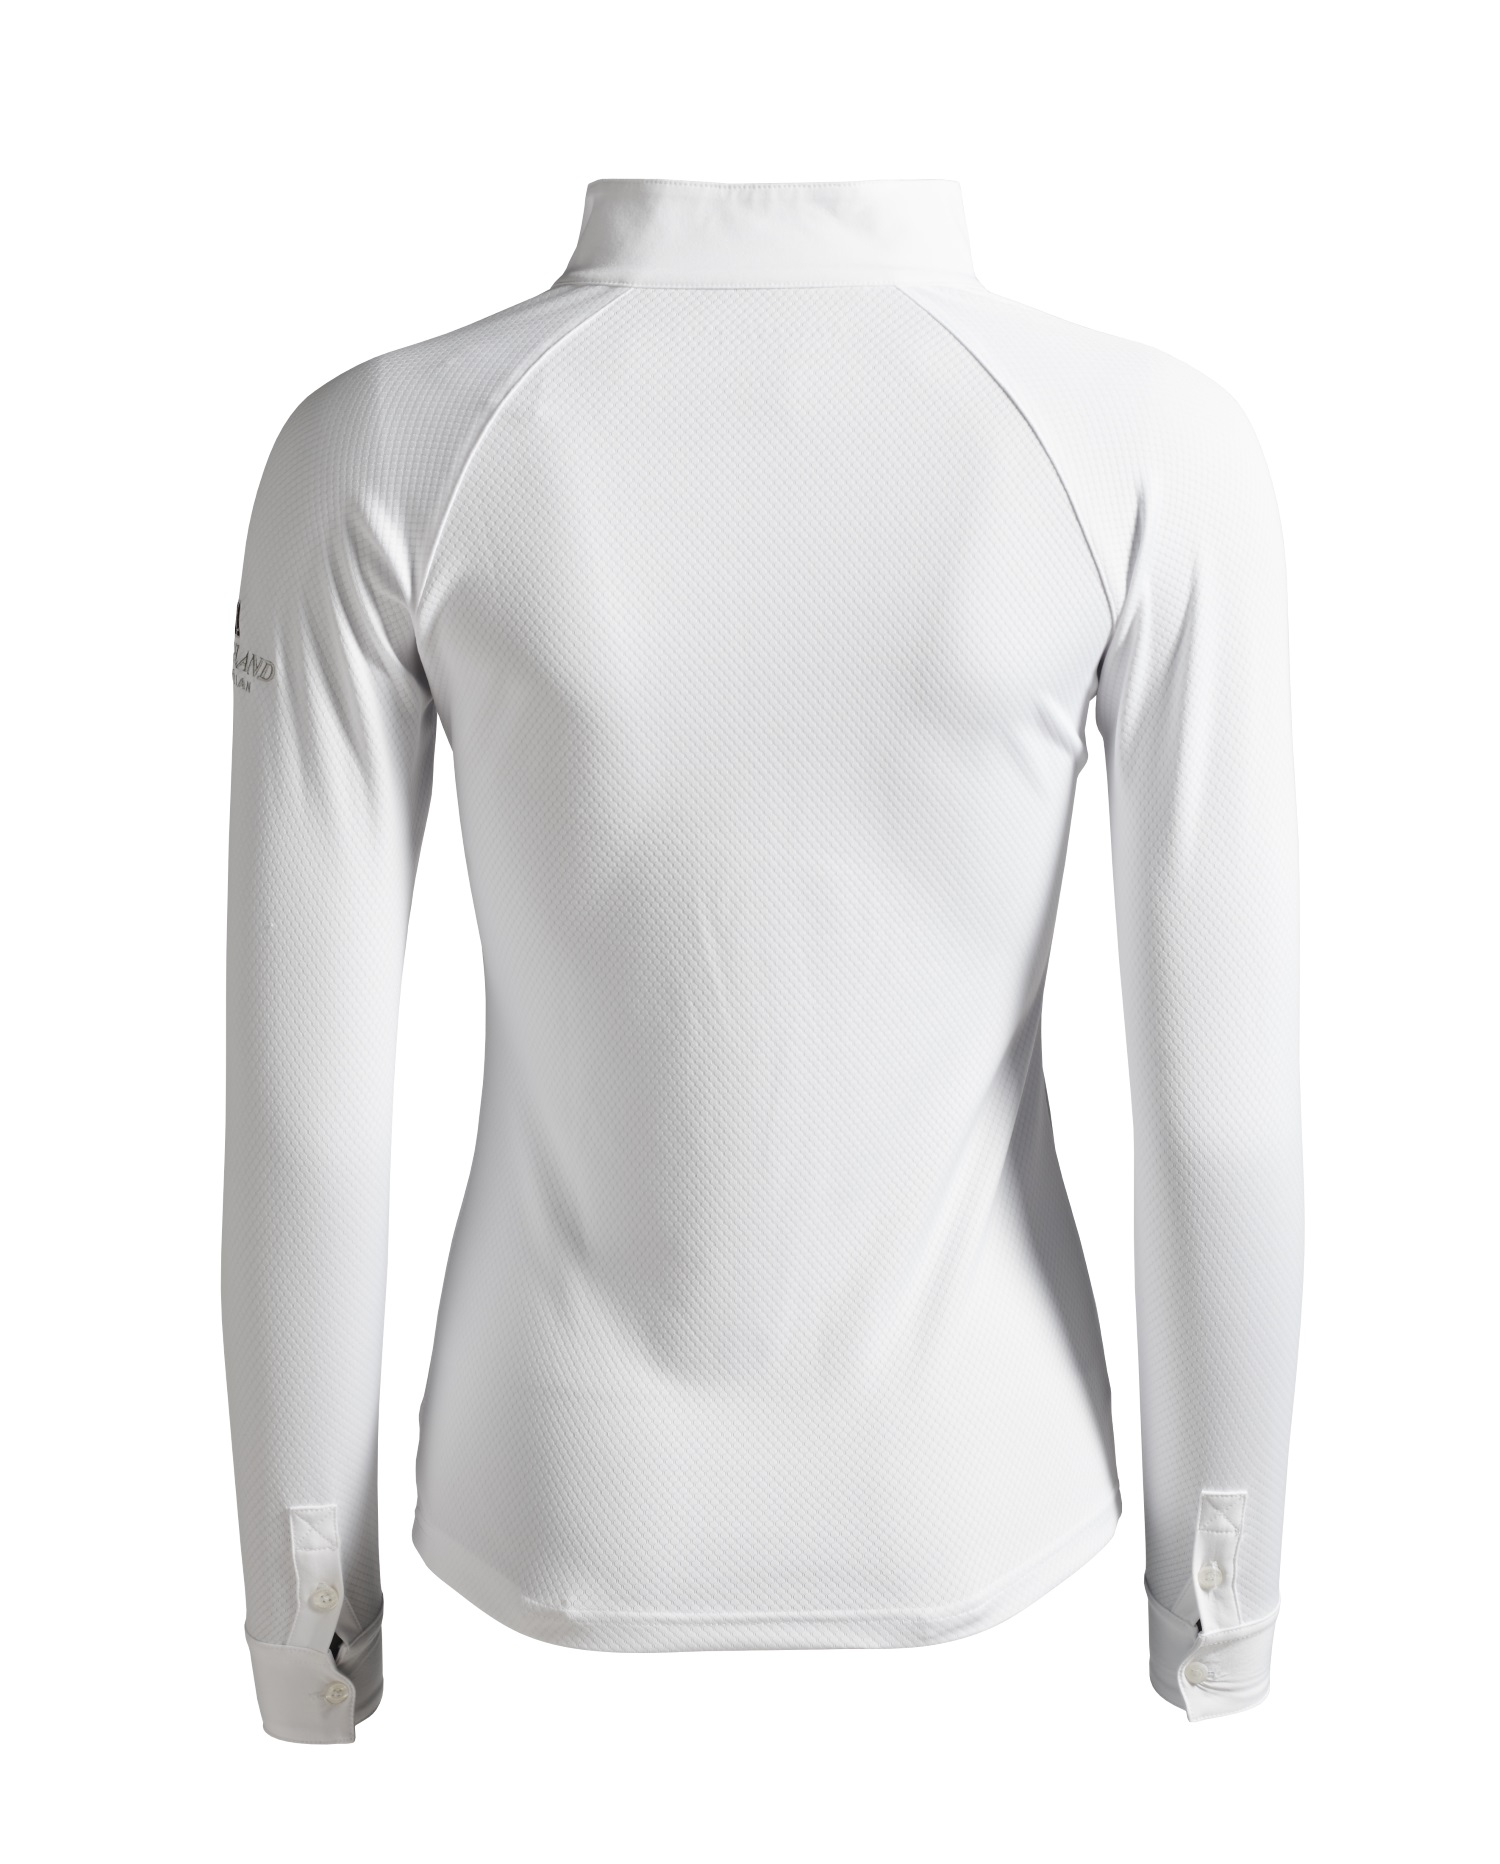 KINGSLAND Classic Damen Langarm Turniershirt - white - M - 2